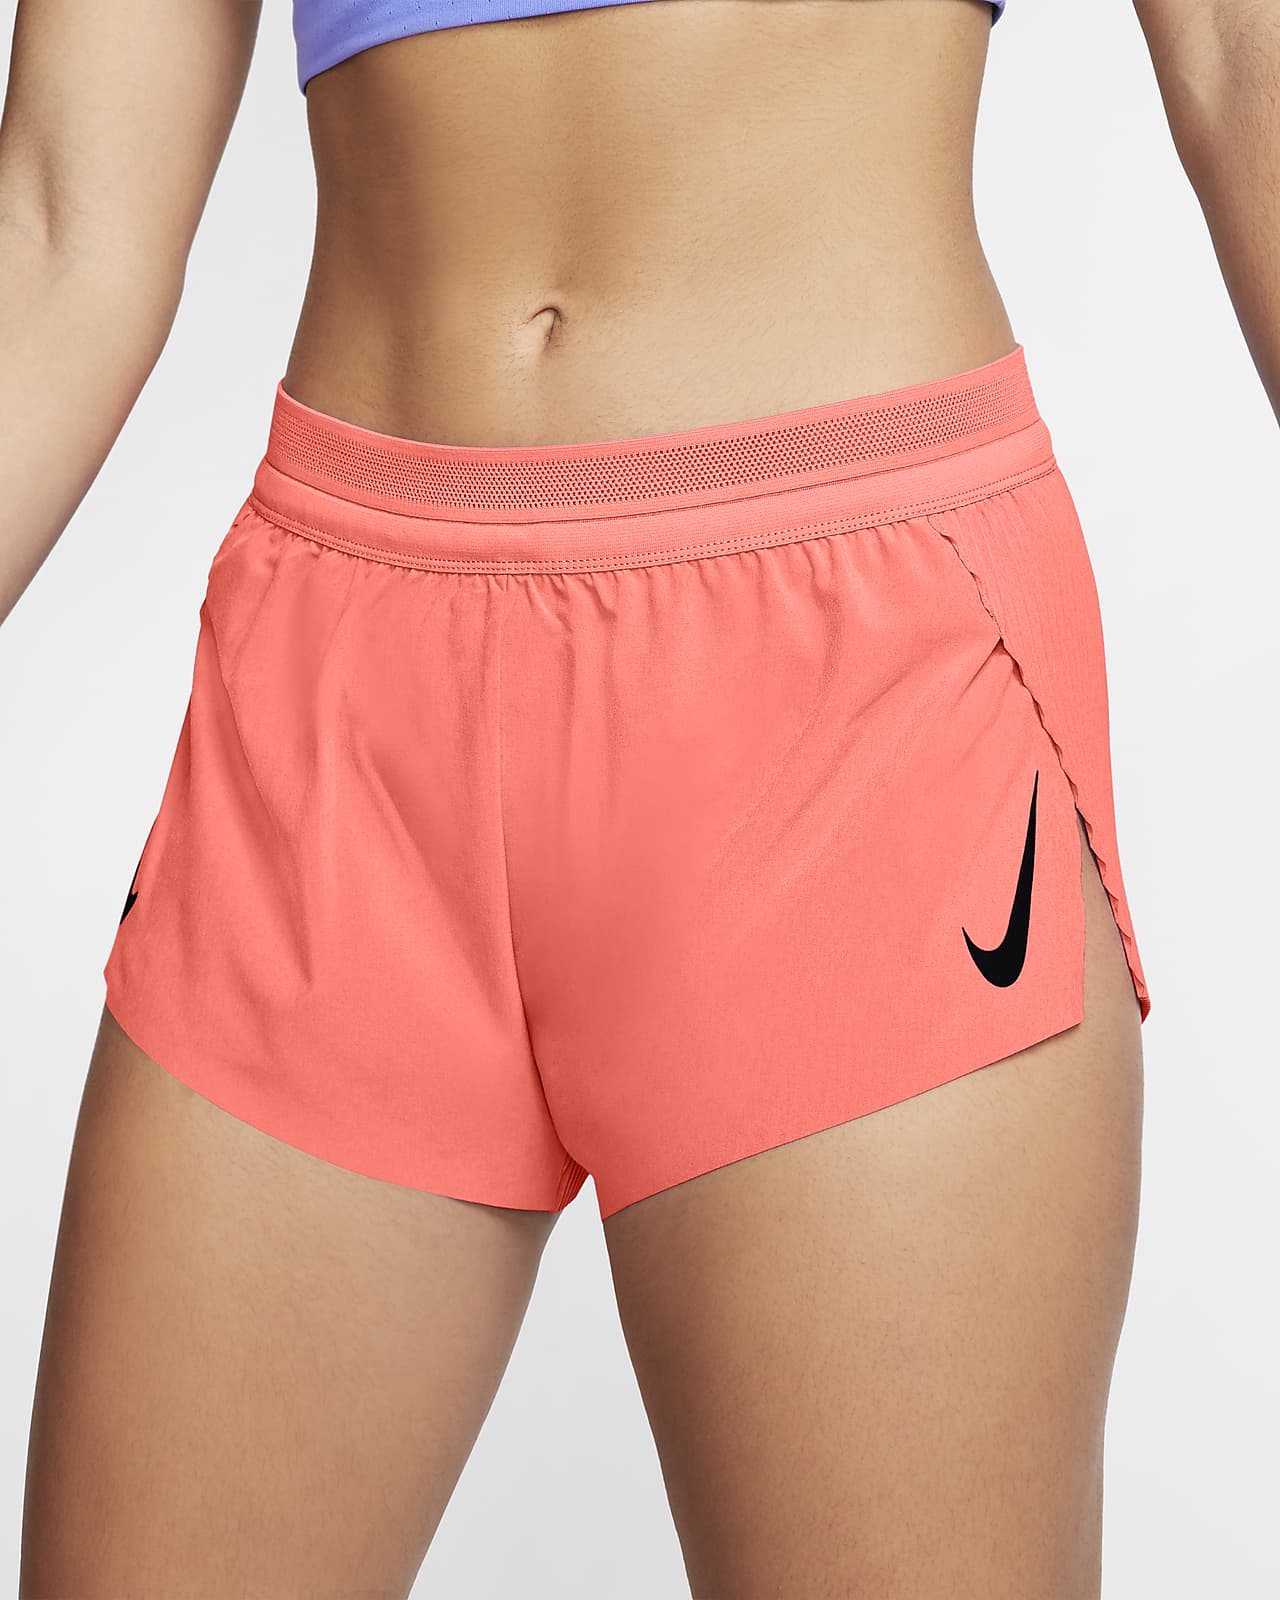 nike women's running shorts